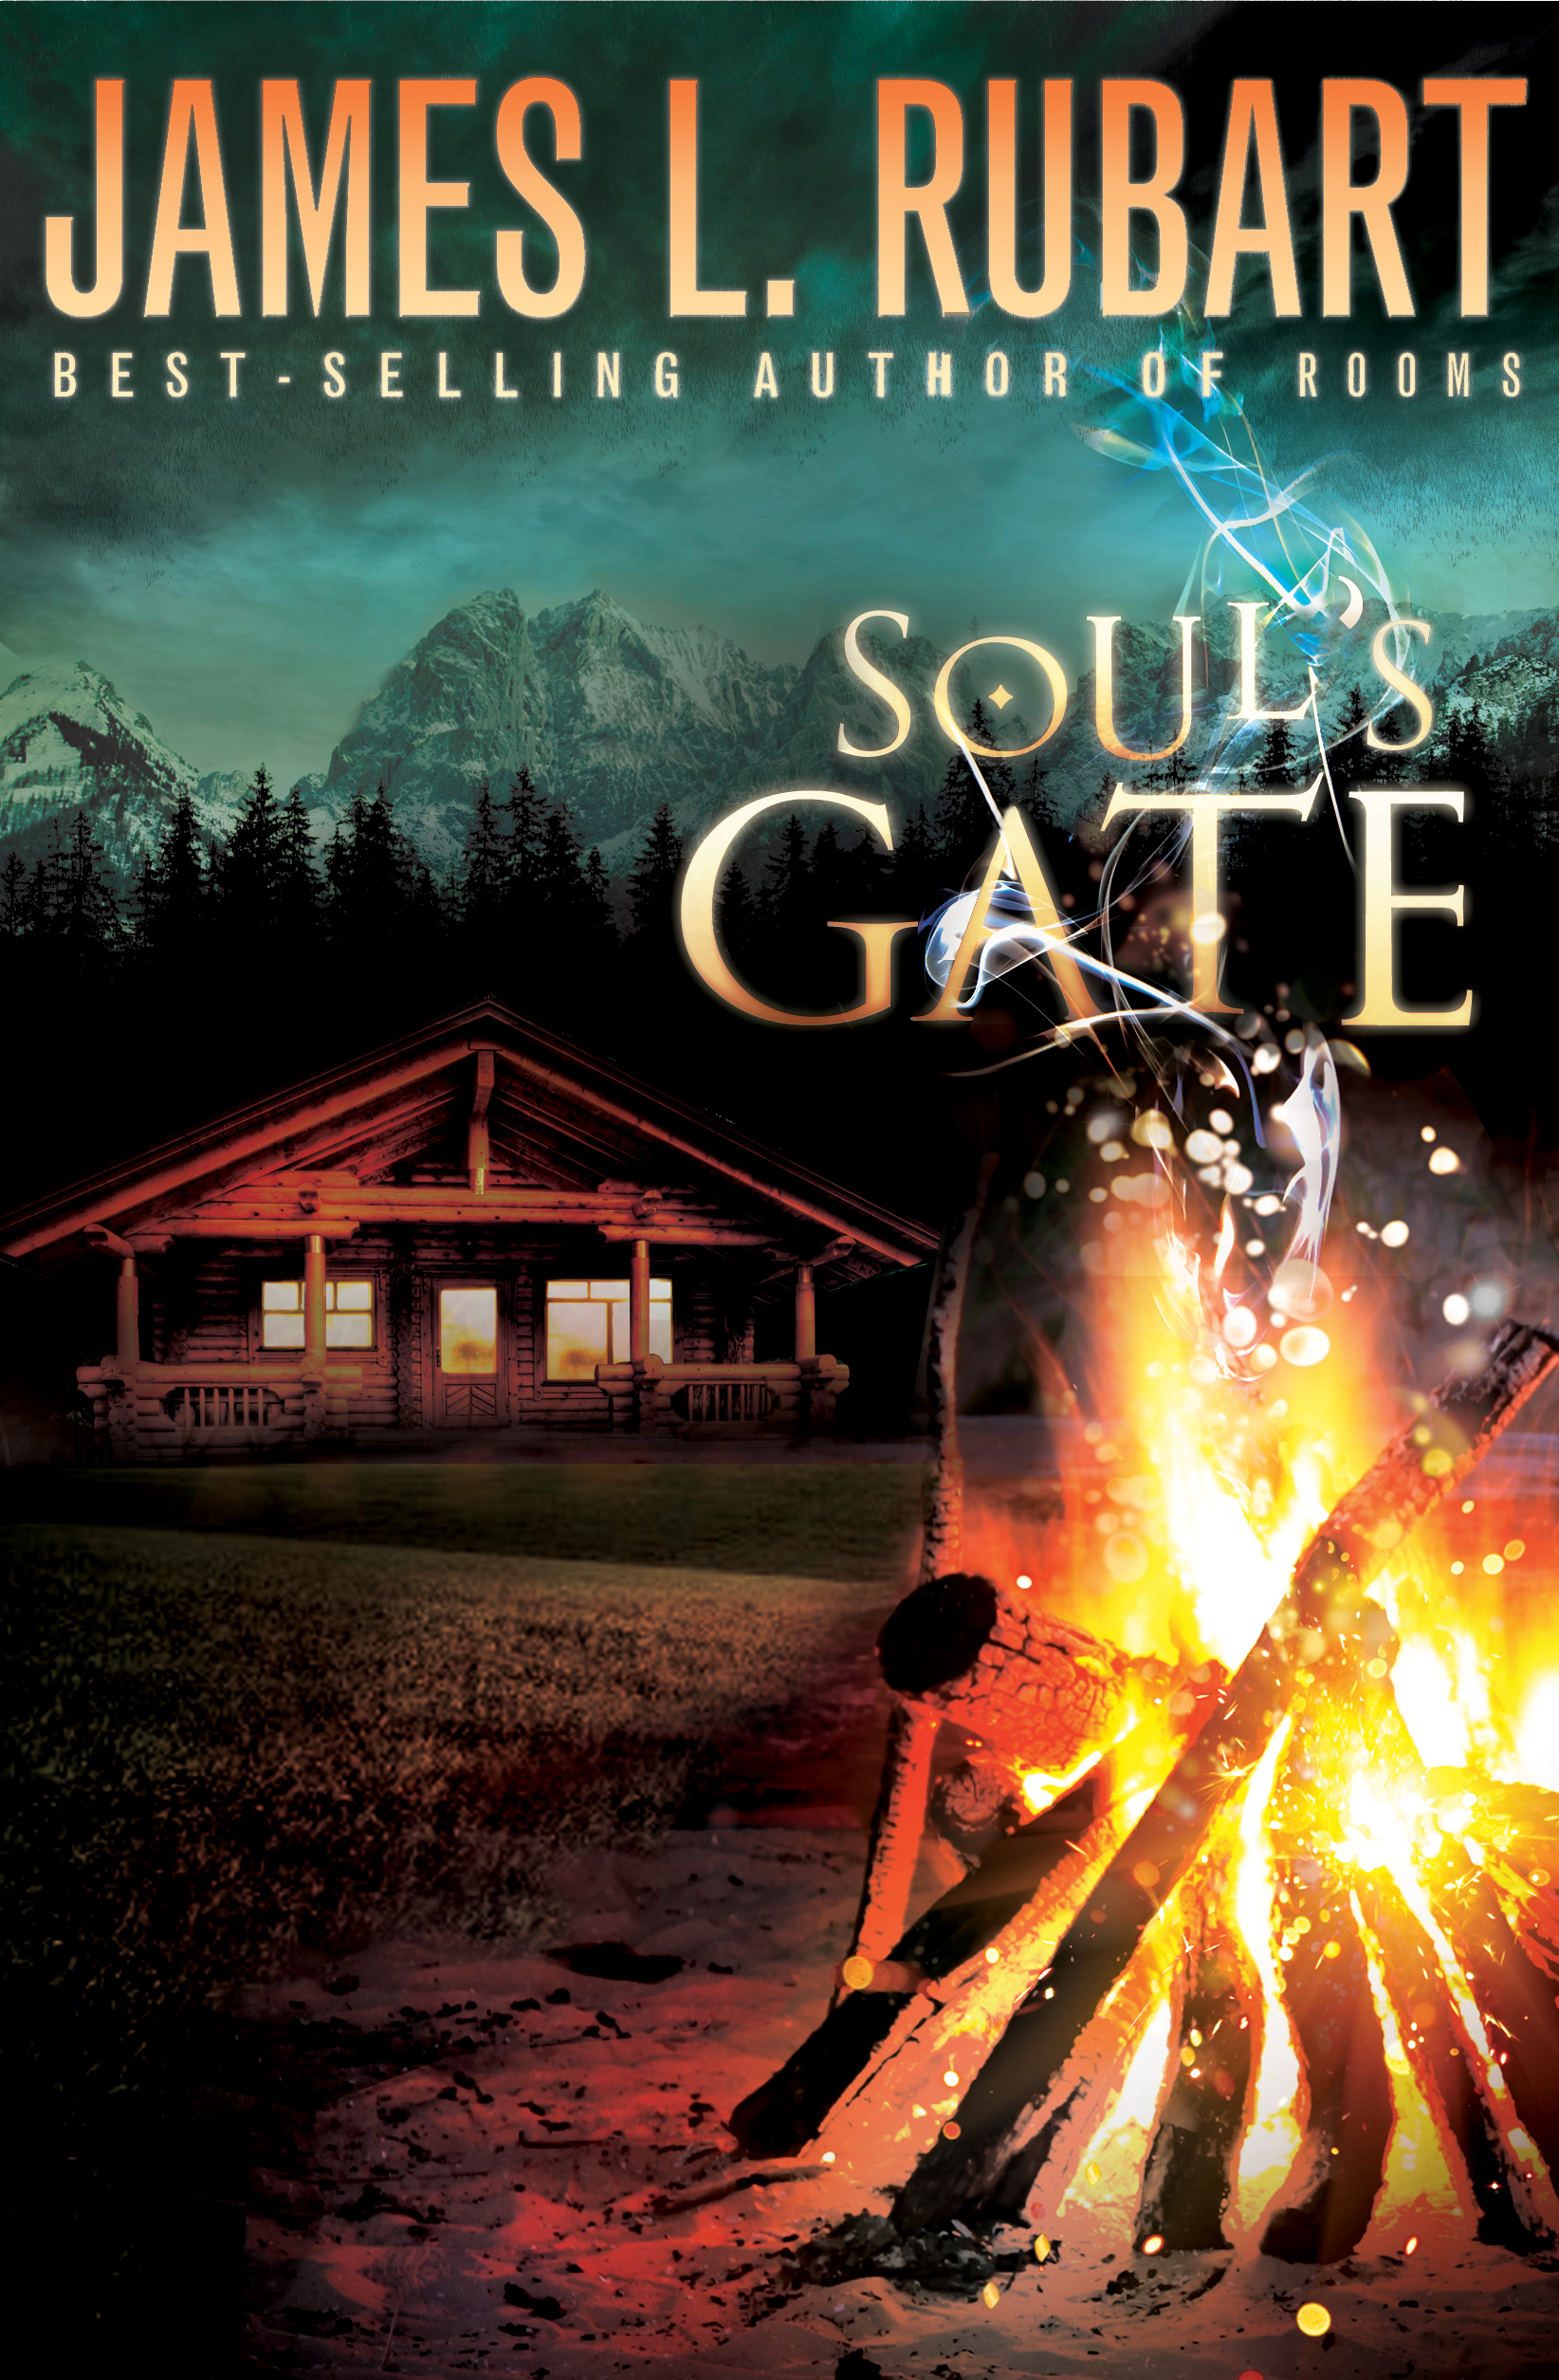 Soul’s Gate